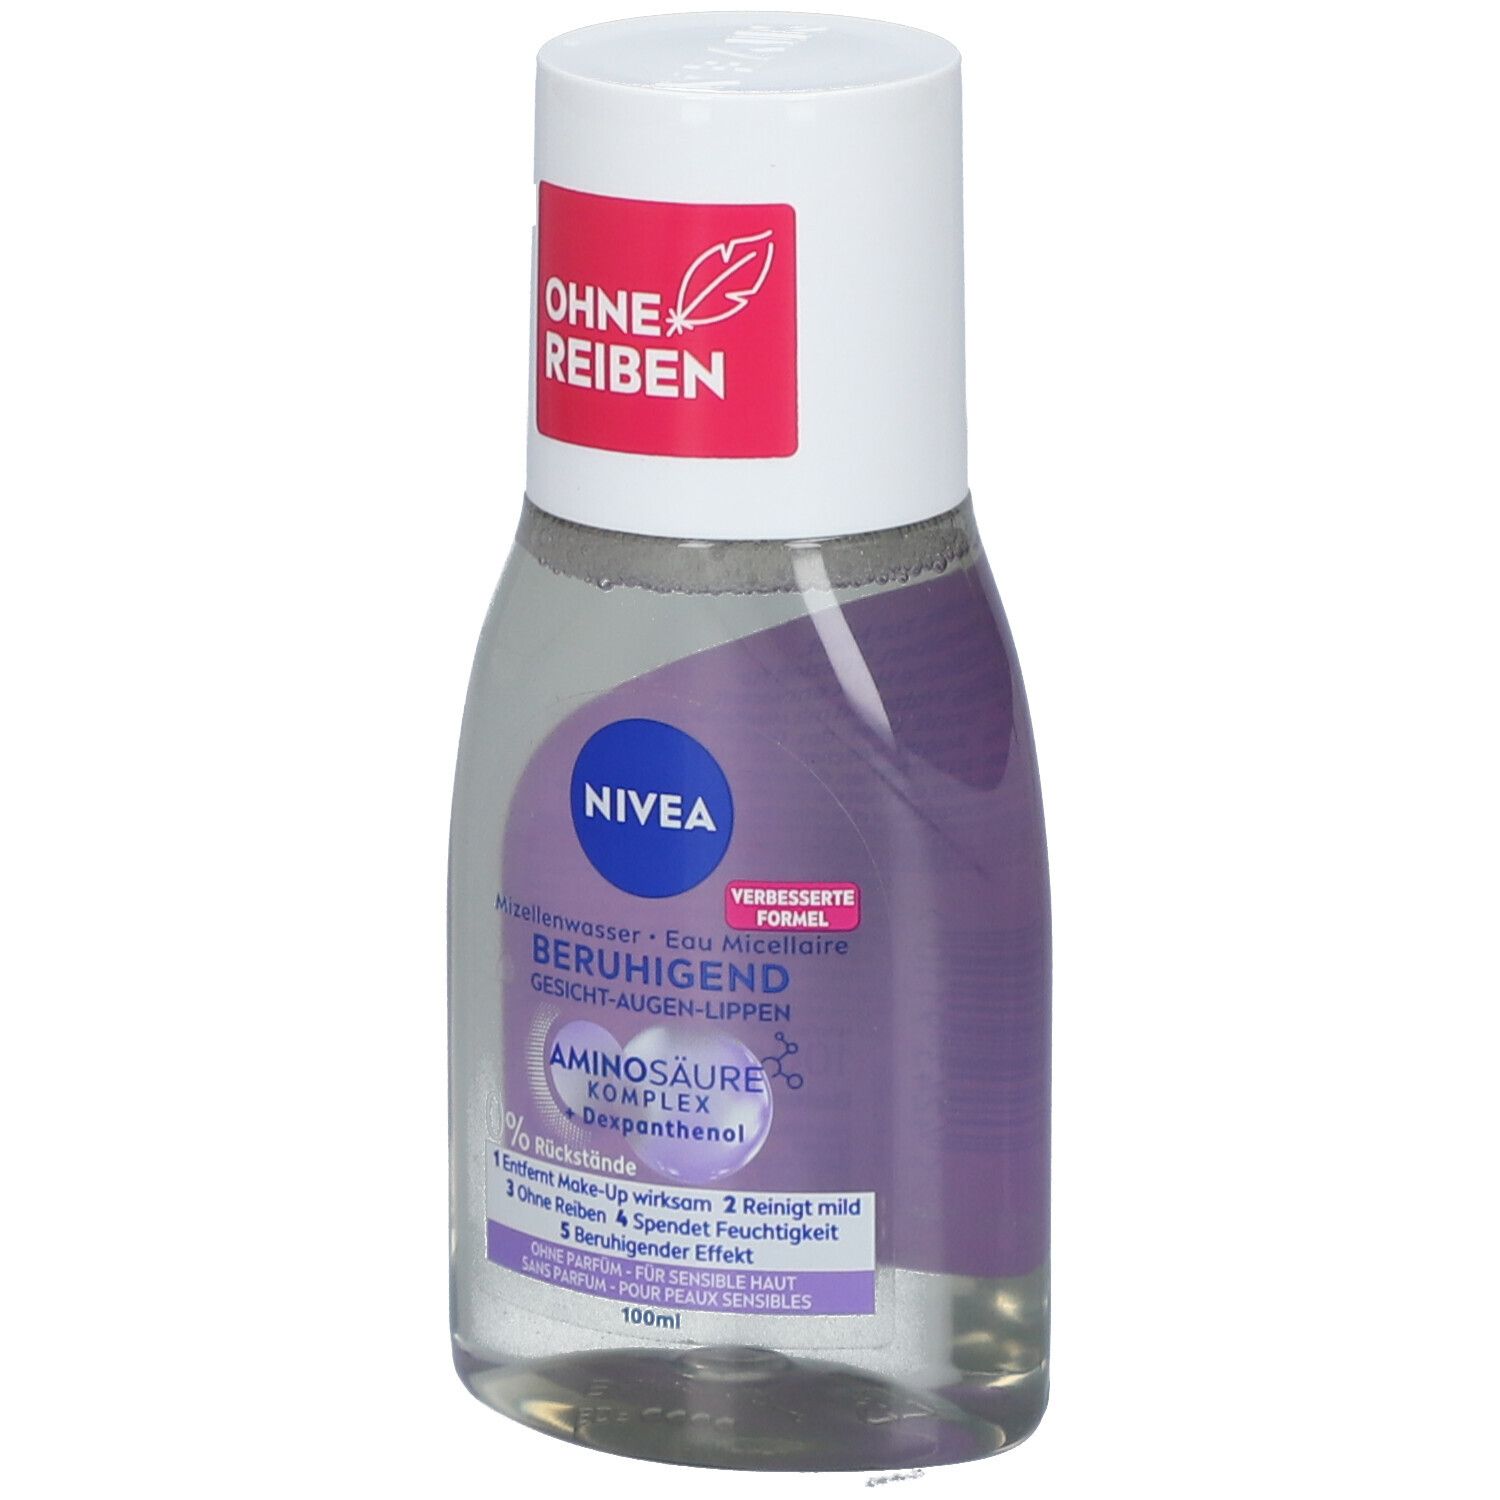 NIVEA® MicellAIR Skin Breathe Mizellenwasser